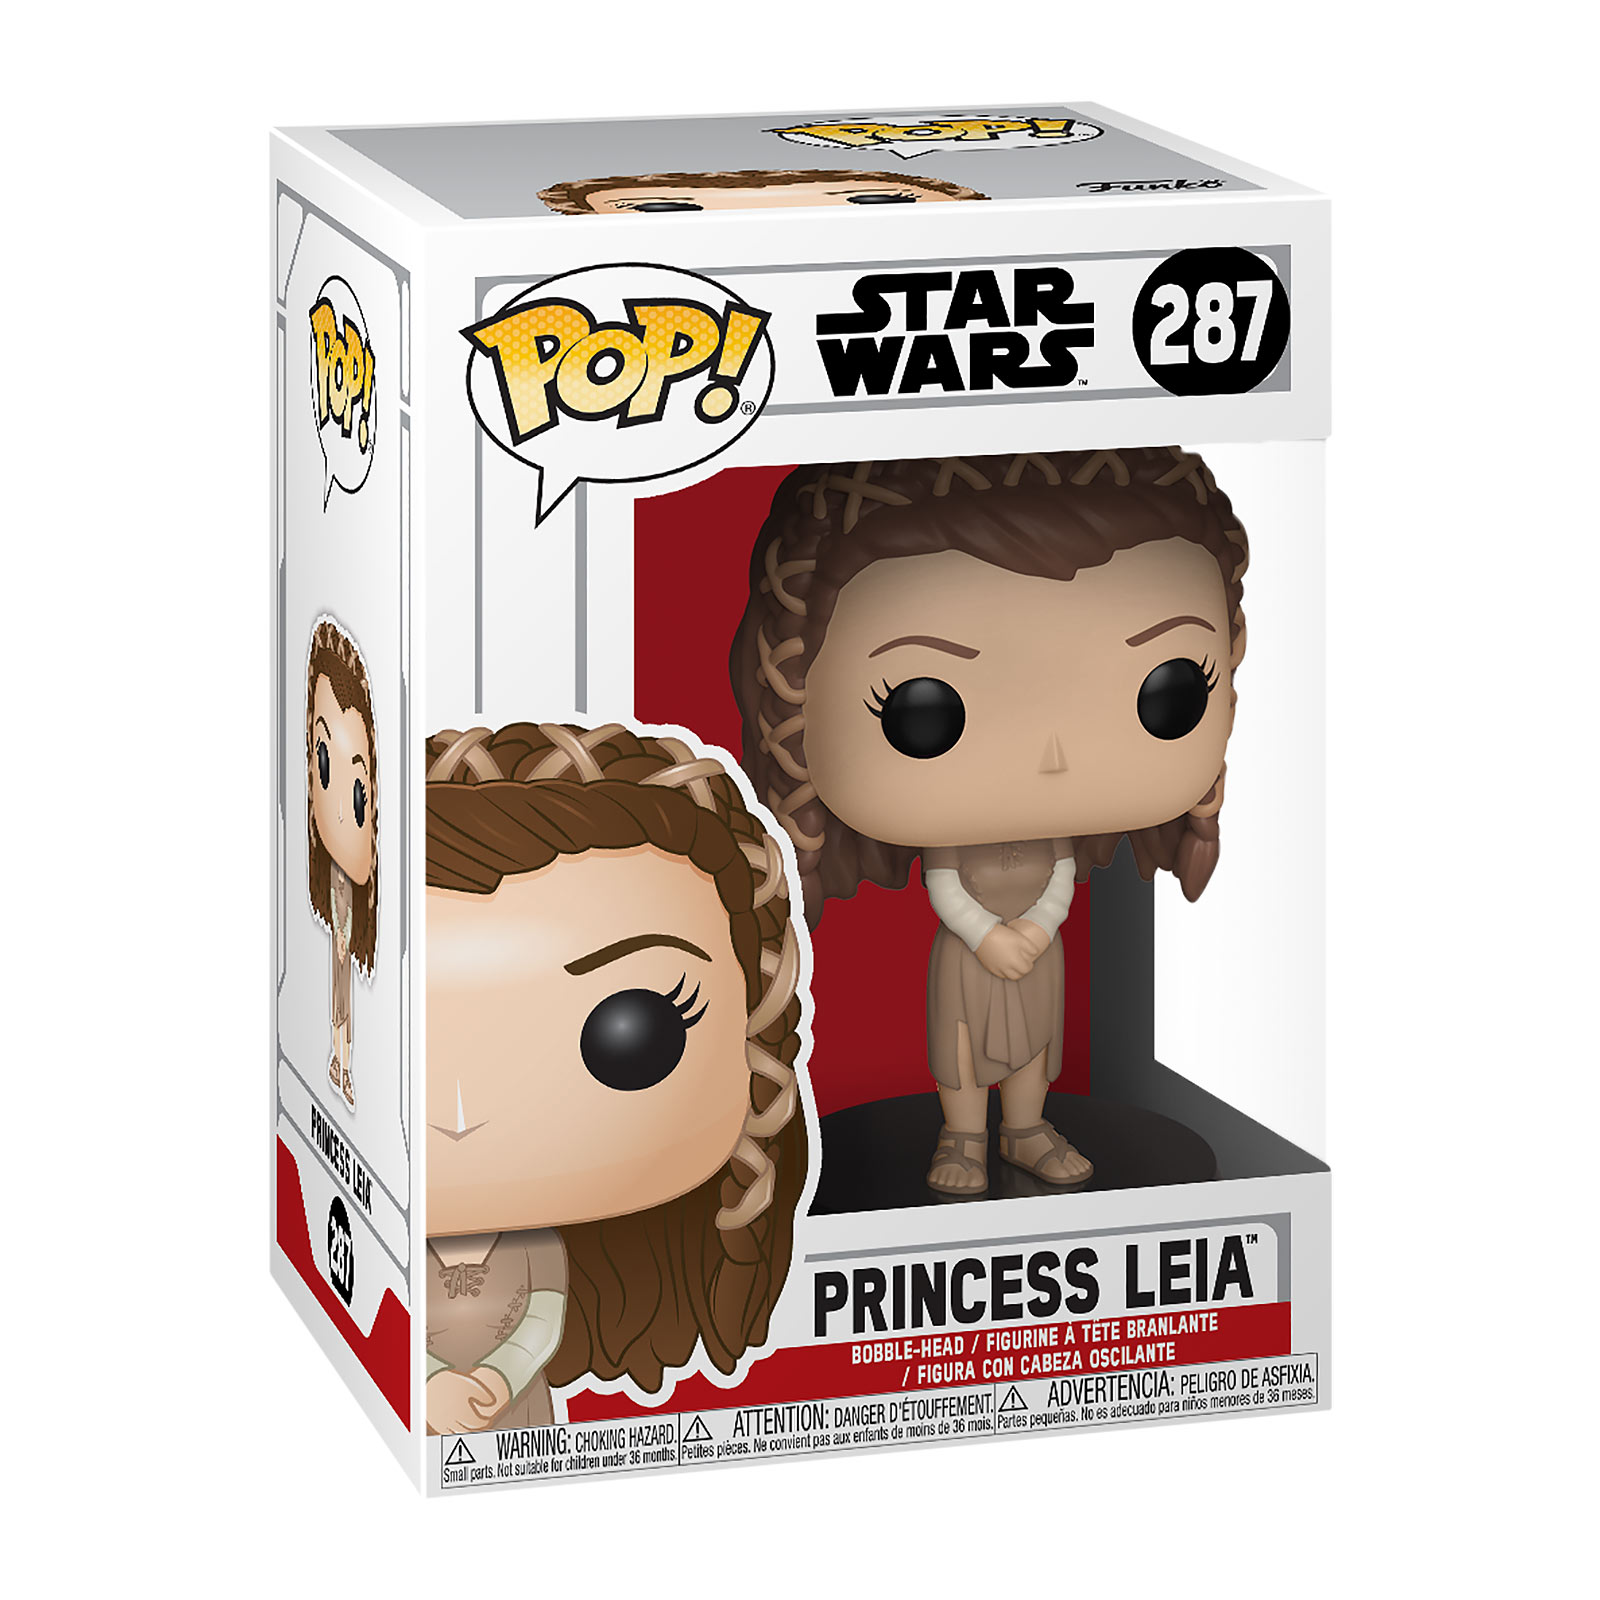 Star Wars - Princess Leia Funko Pop bobblehead figure